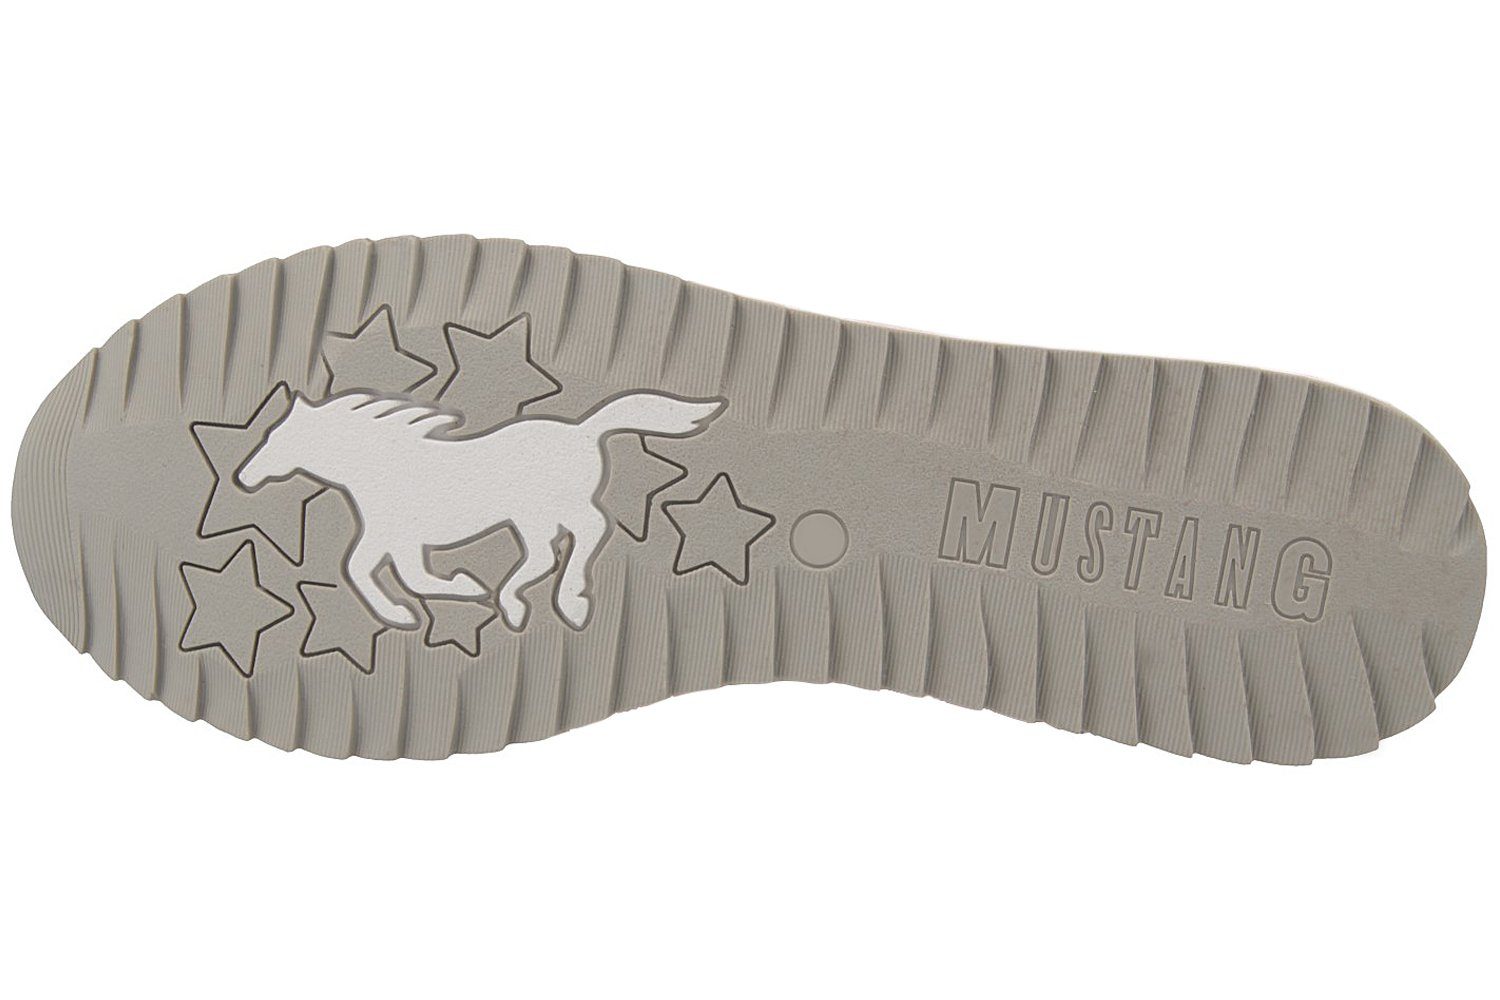 Shoes Mustang Slipper 1237-401-21